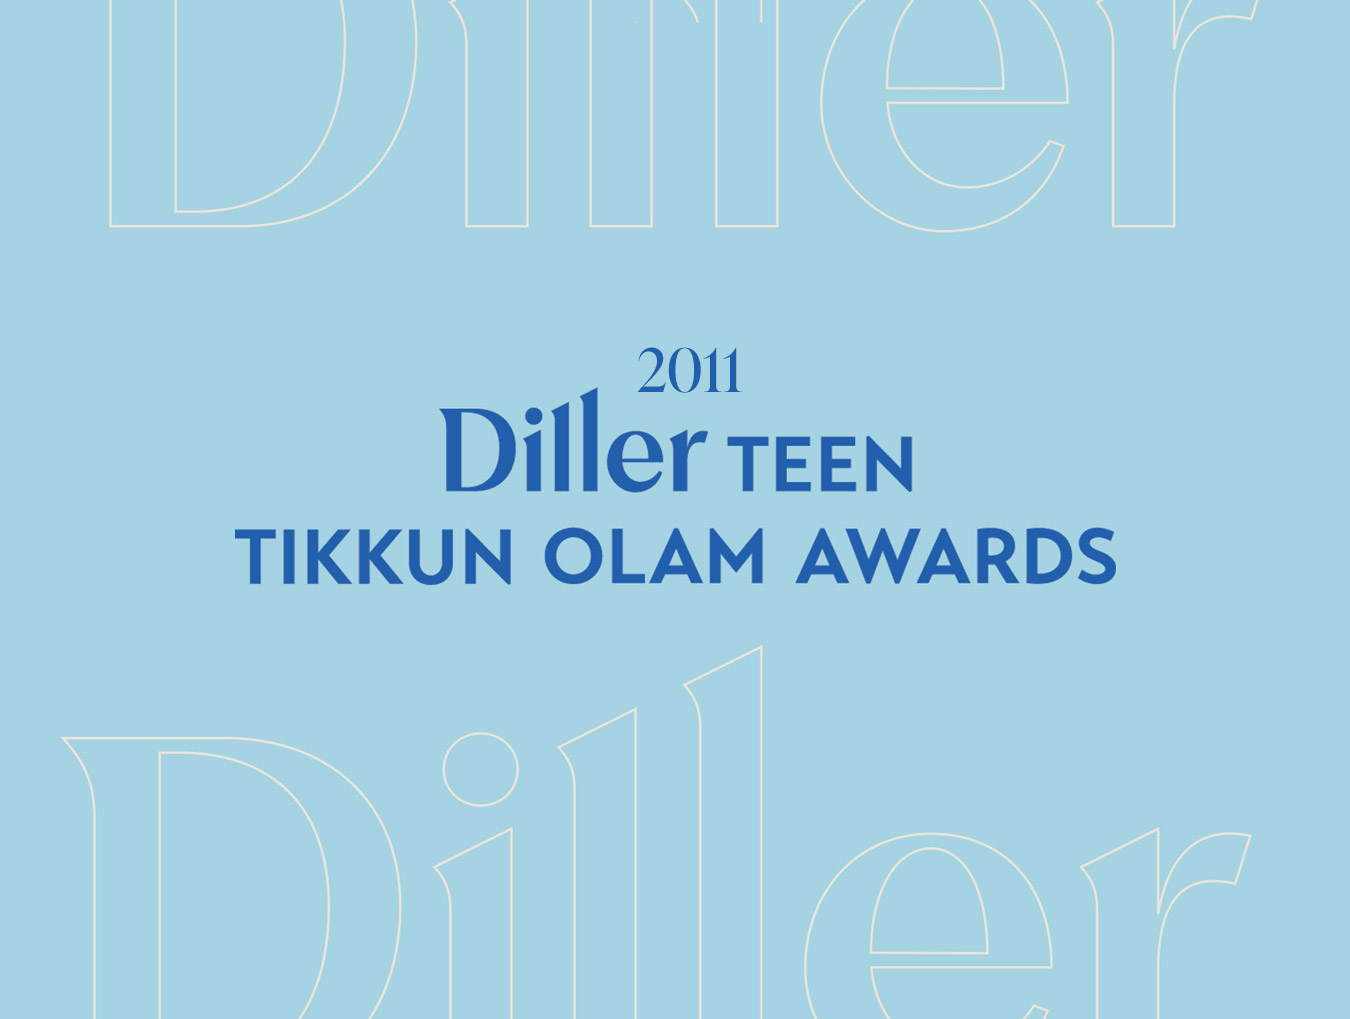 2011 Diller Teen Tikkun Olam Awards video